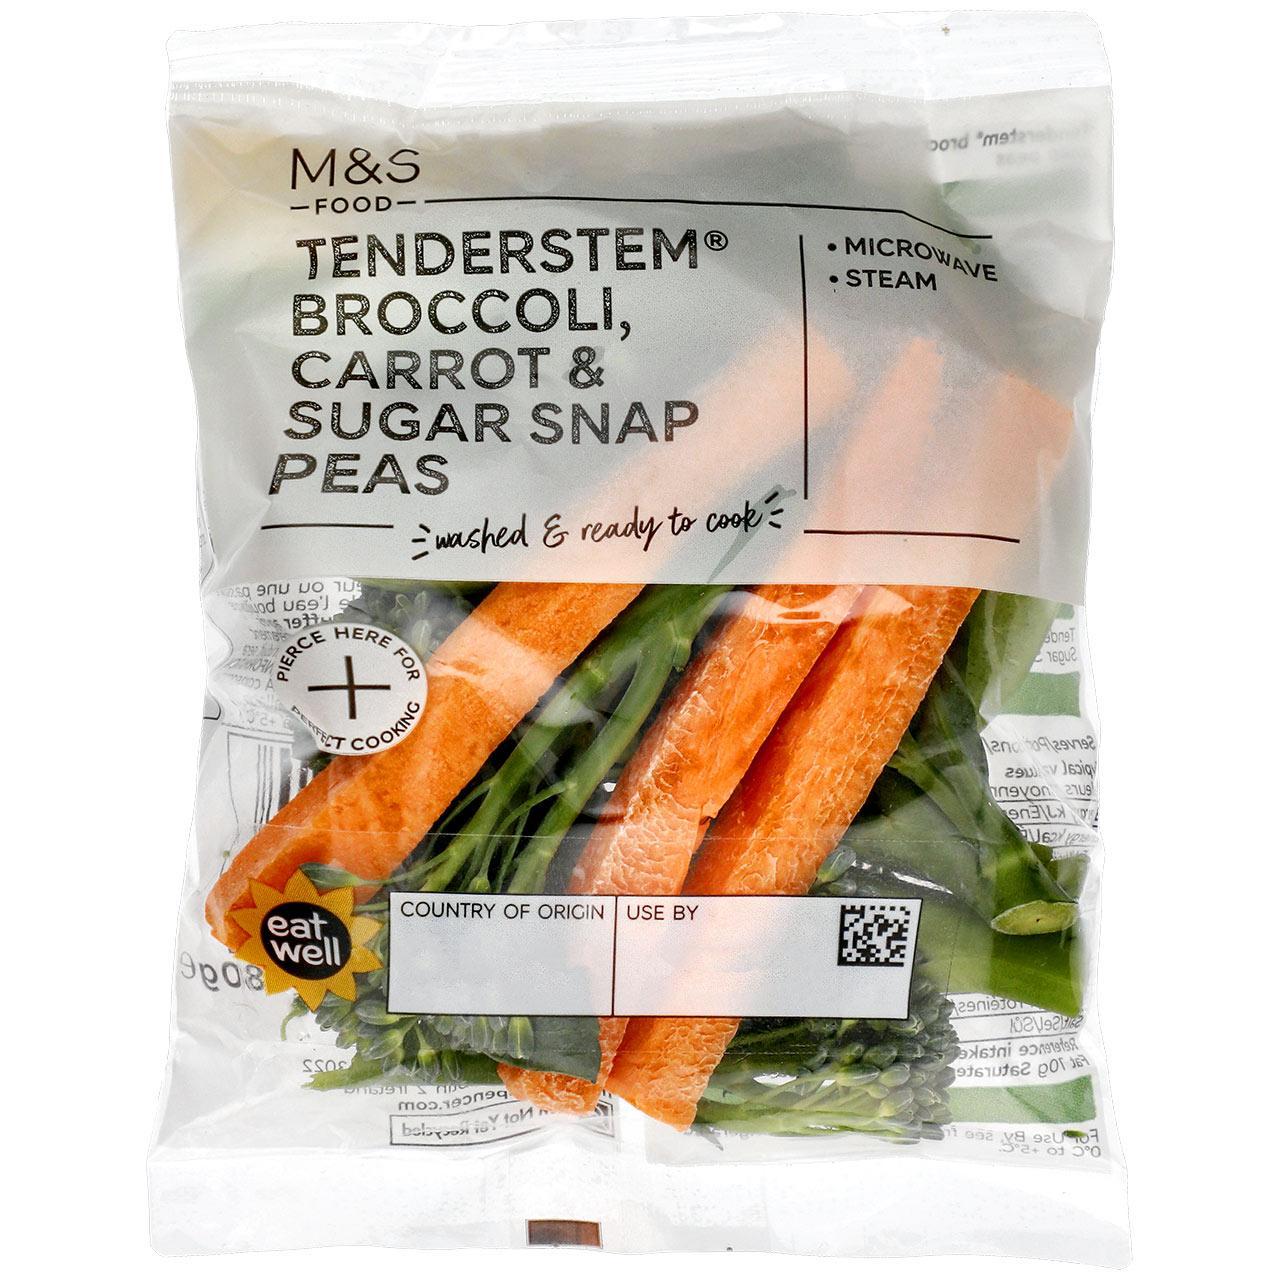 M&S Tenderstem Broccoli, Carrot & Sugar Snap Peas